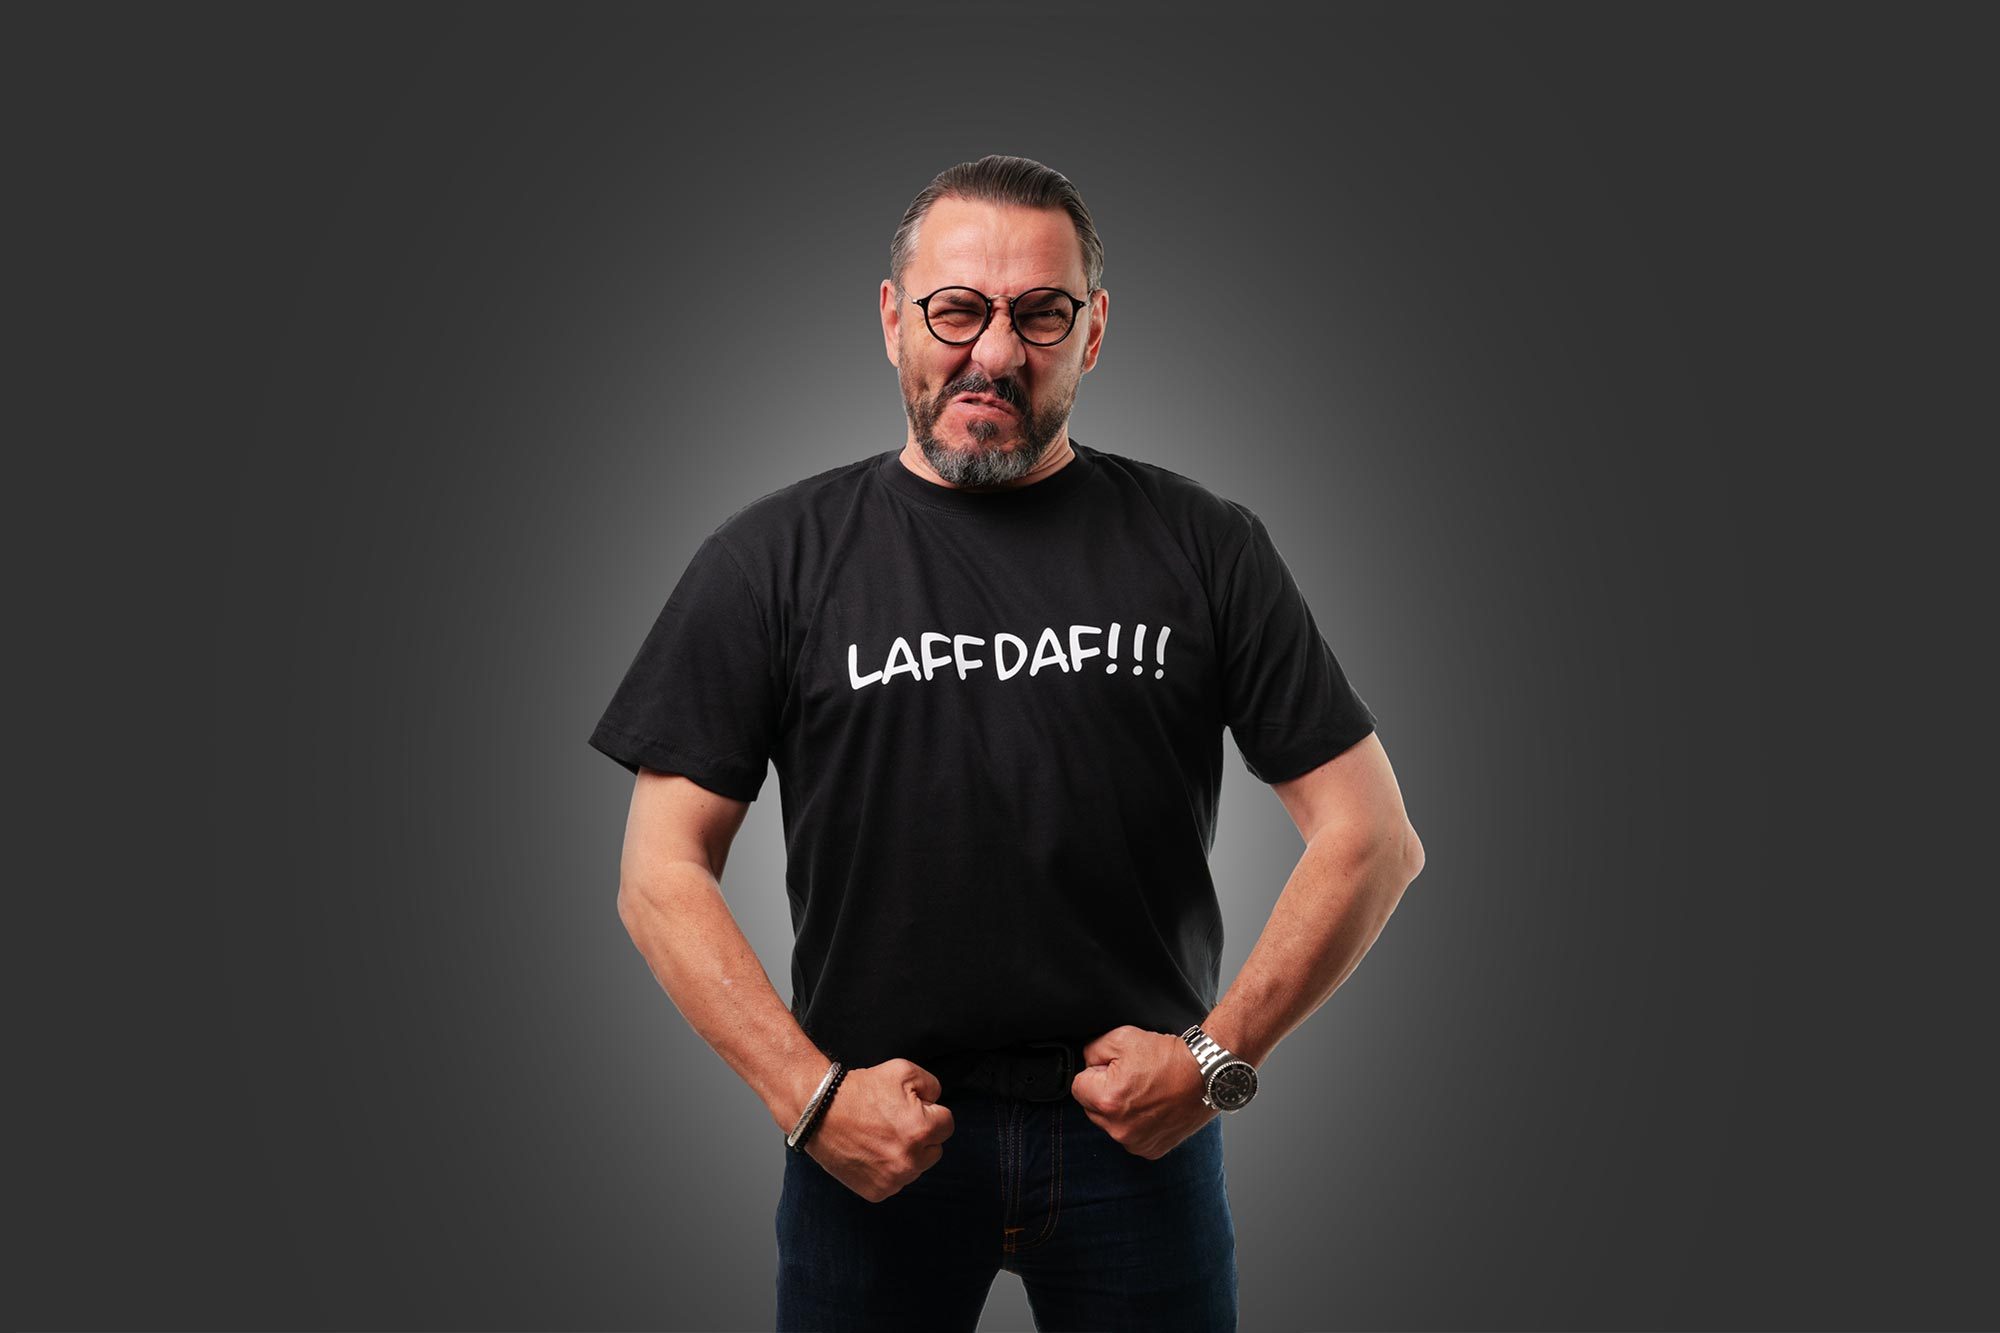 T-shirt mit dem Aufdruck "Laff daf"